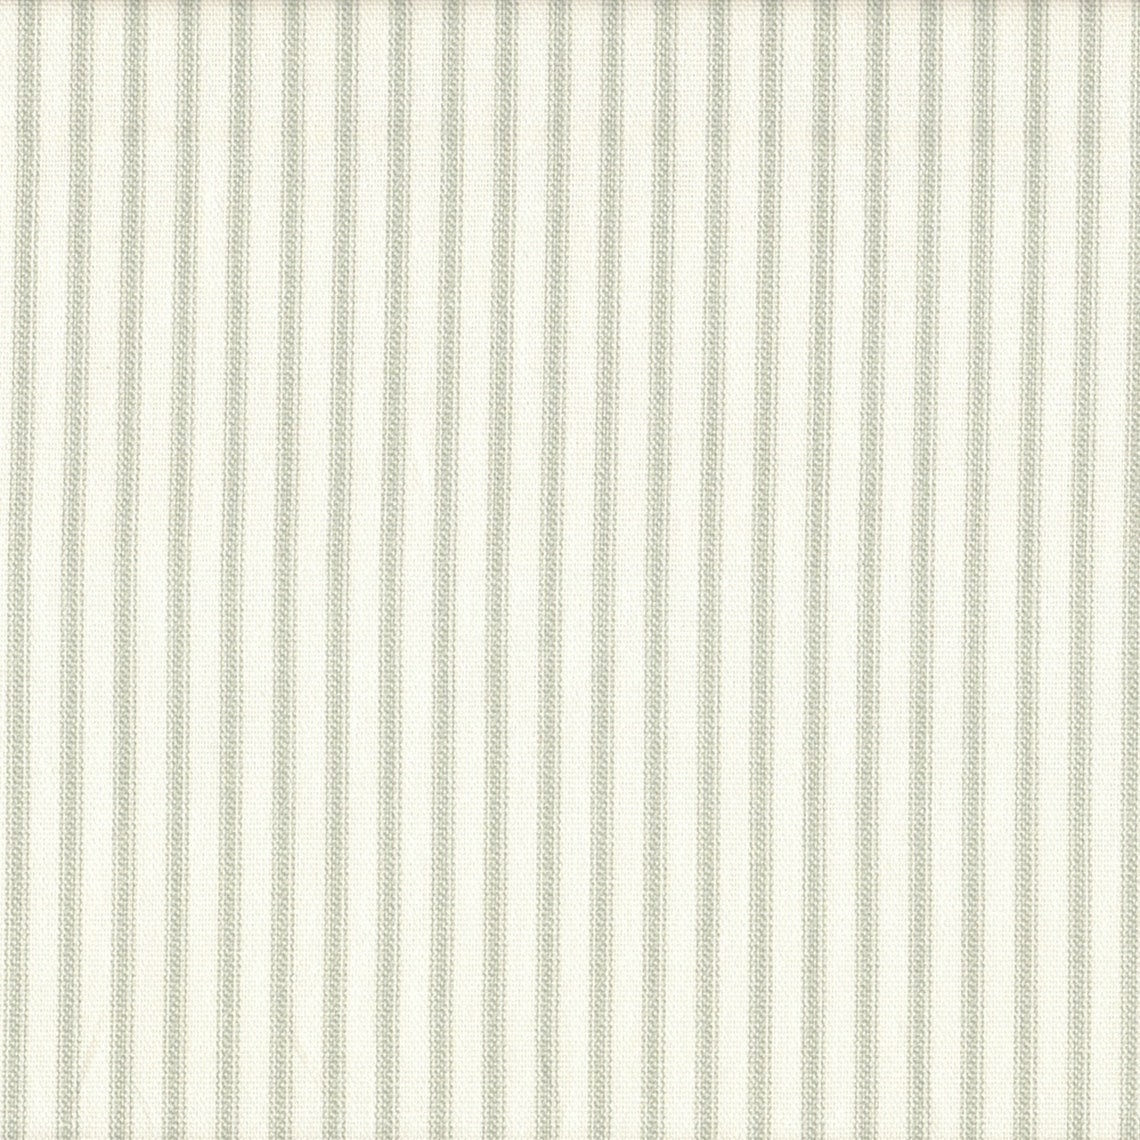 tab top curtain panels pair in farmhouse pale sage green ticking stripe on cream